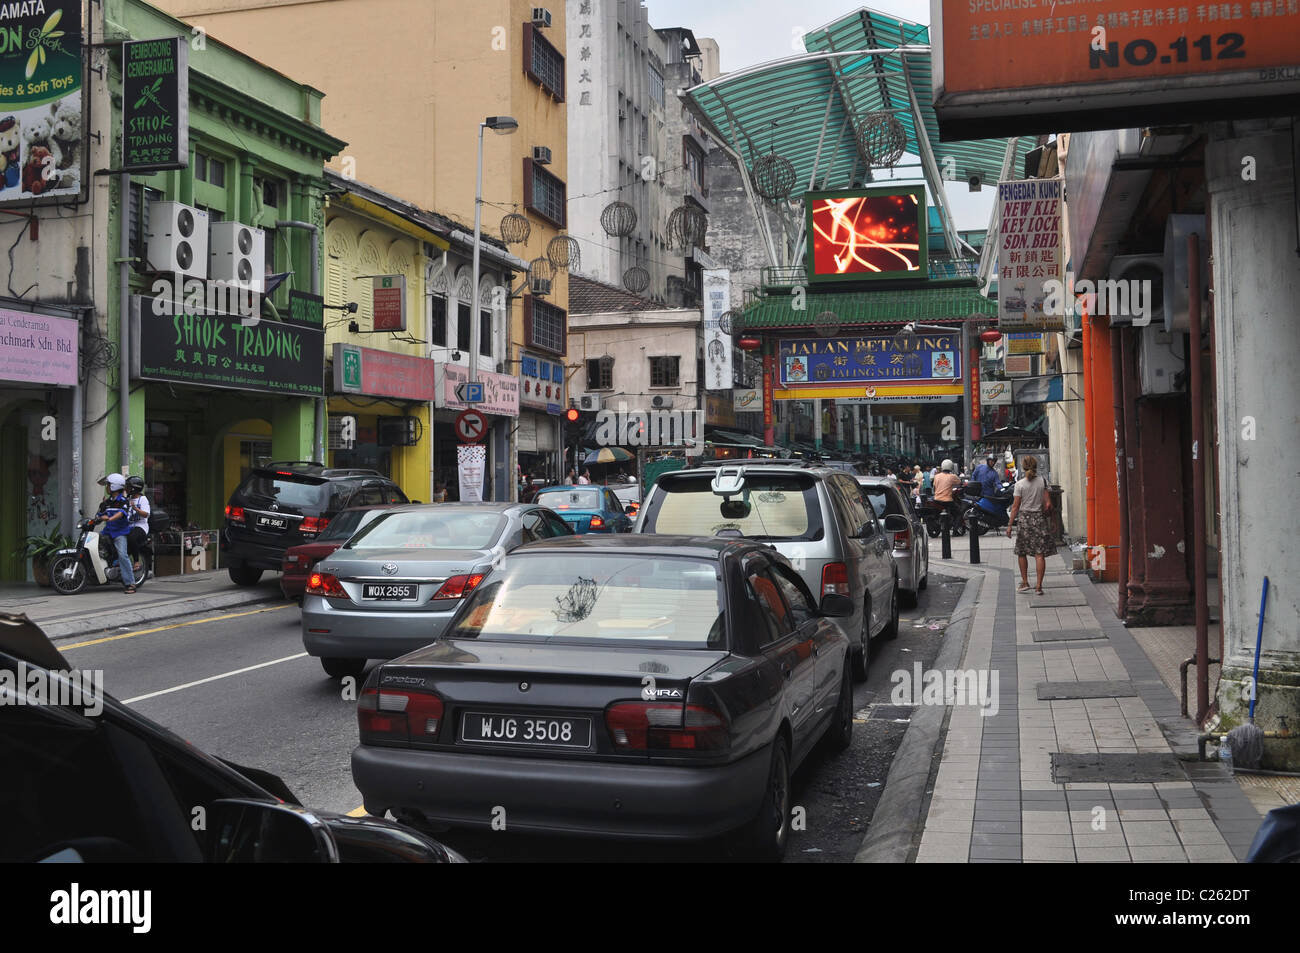 On the street in Chinatown in Kuala Lumpur. Stock Photo